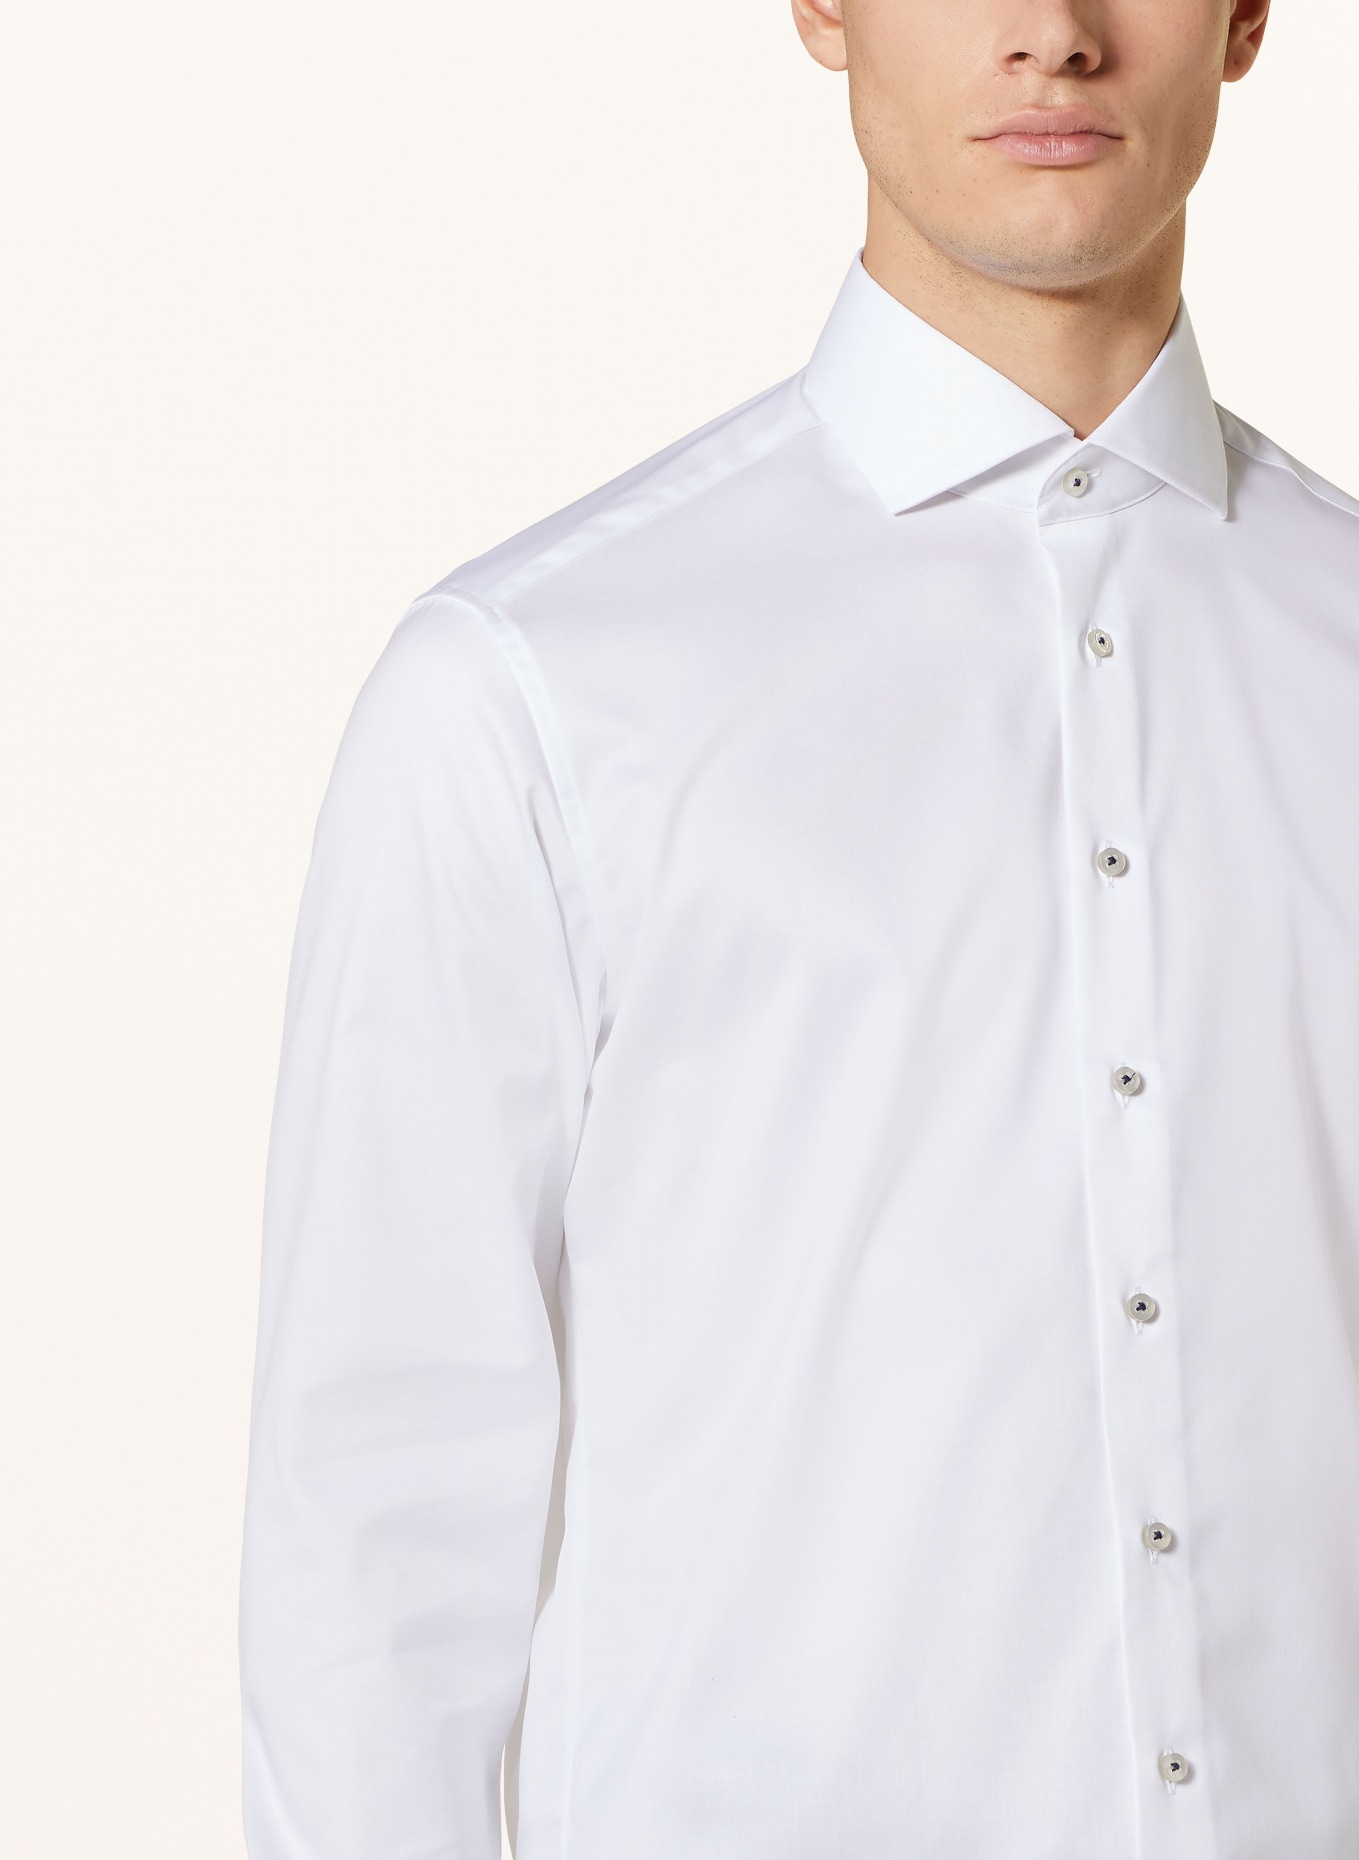 Shirt white modern 1863 fit ETERNA in